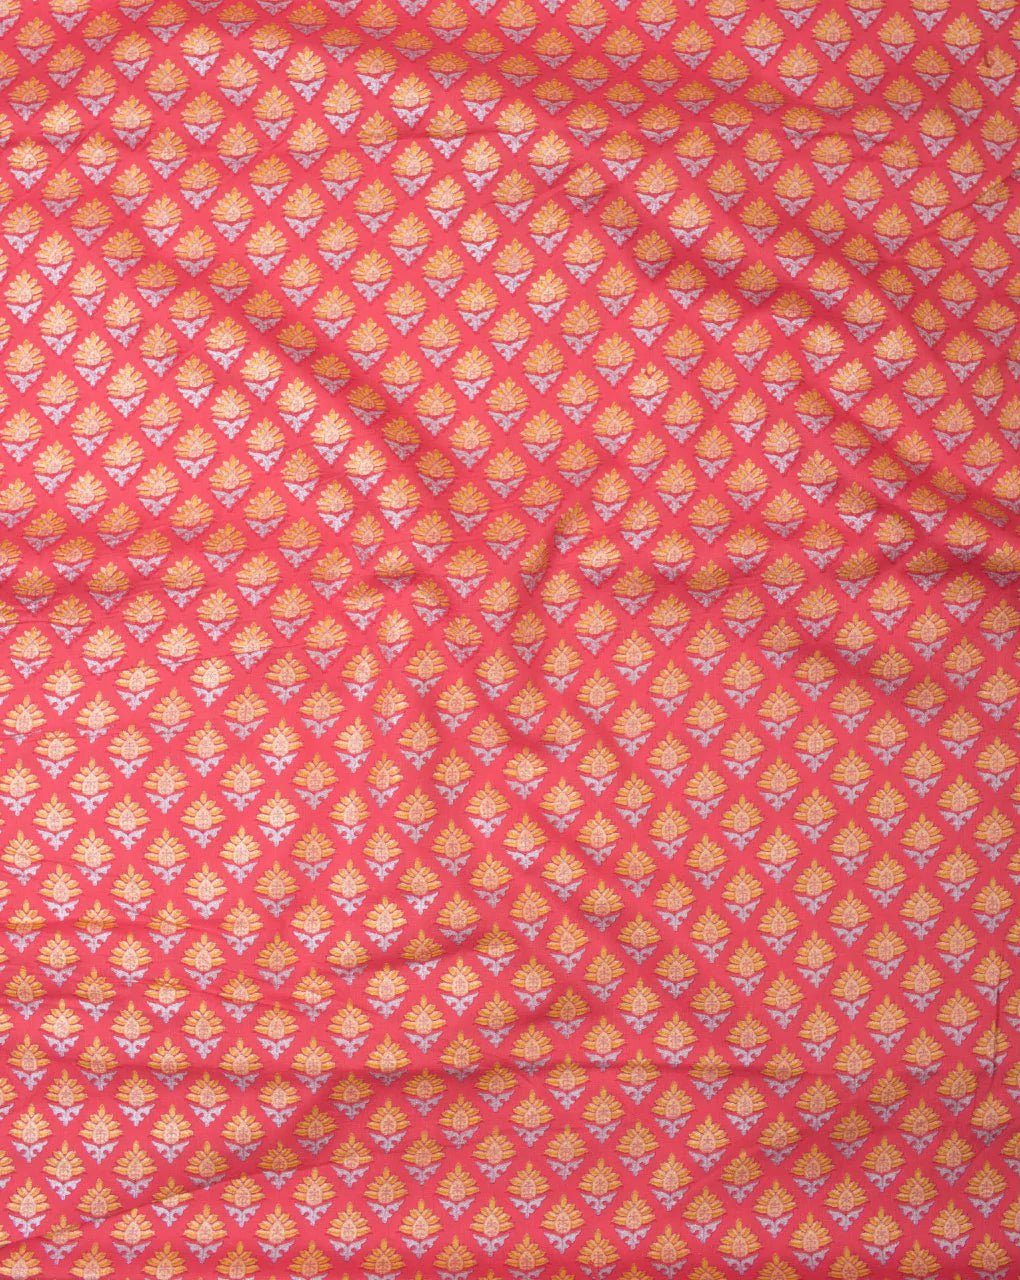 Foil Screen Print Rayon Modal Fabric - Fabriclore.com